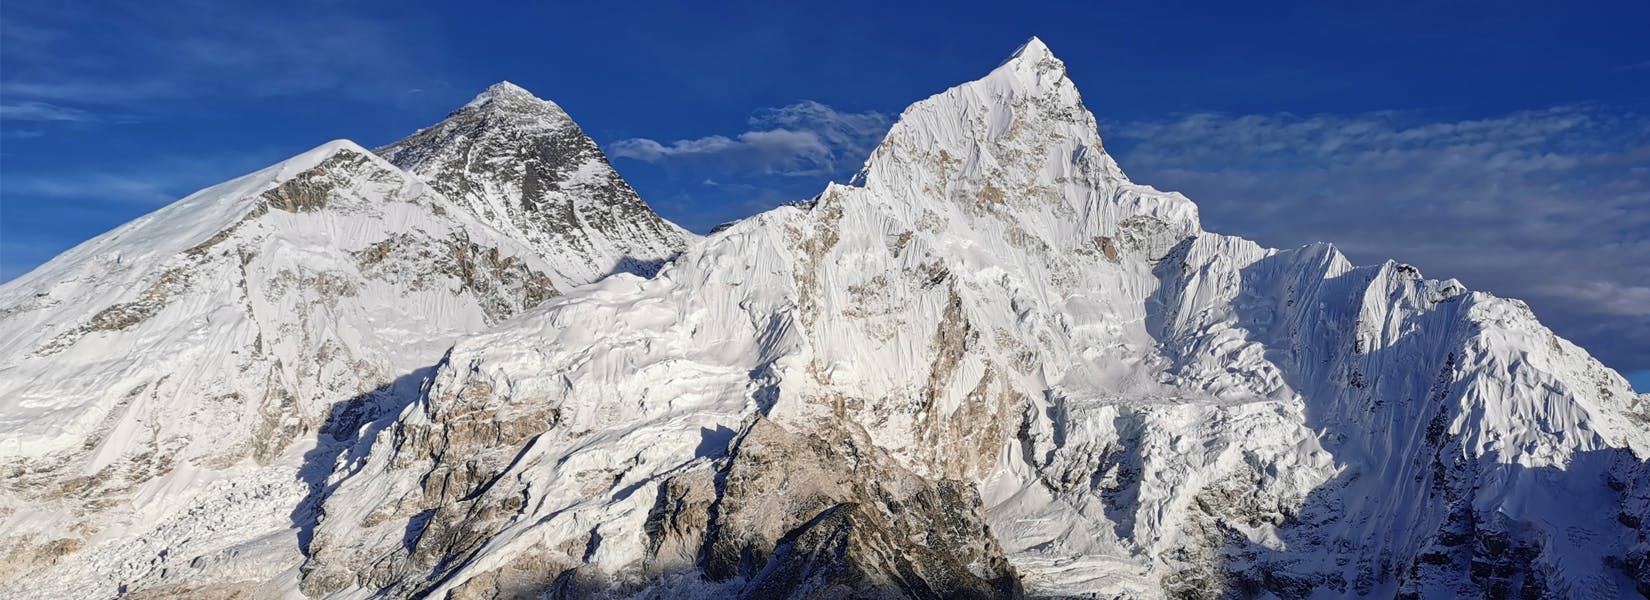 Everest Mani Rimdu Festival Trek - <span class="font-light">13 days</span>